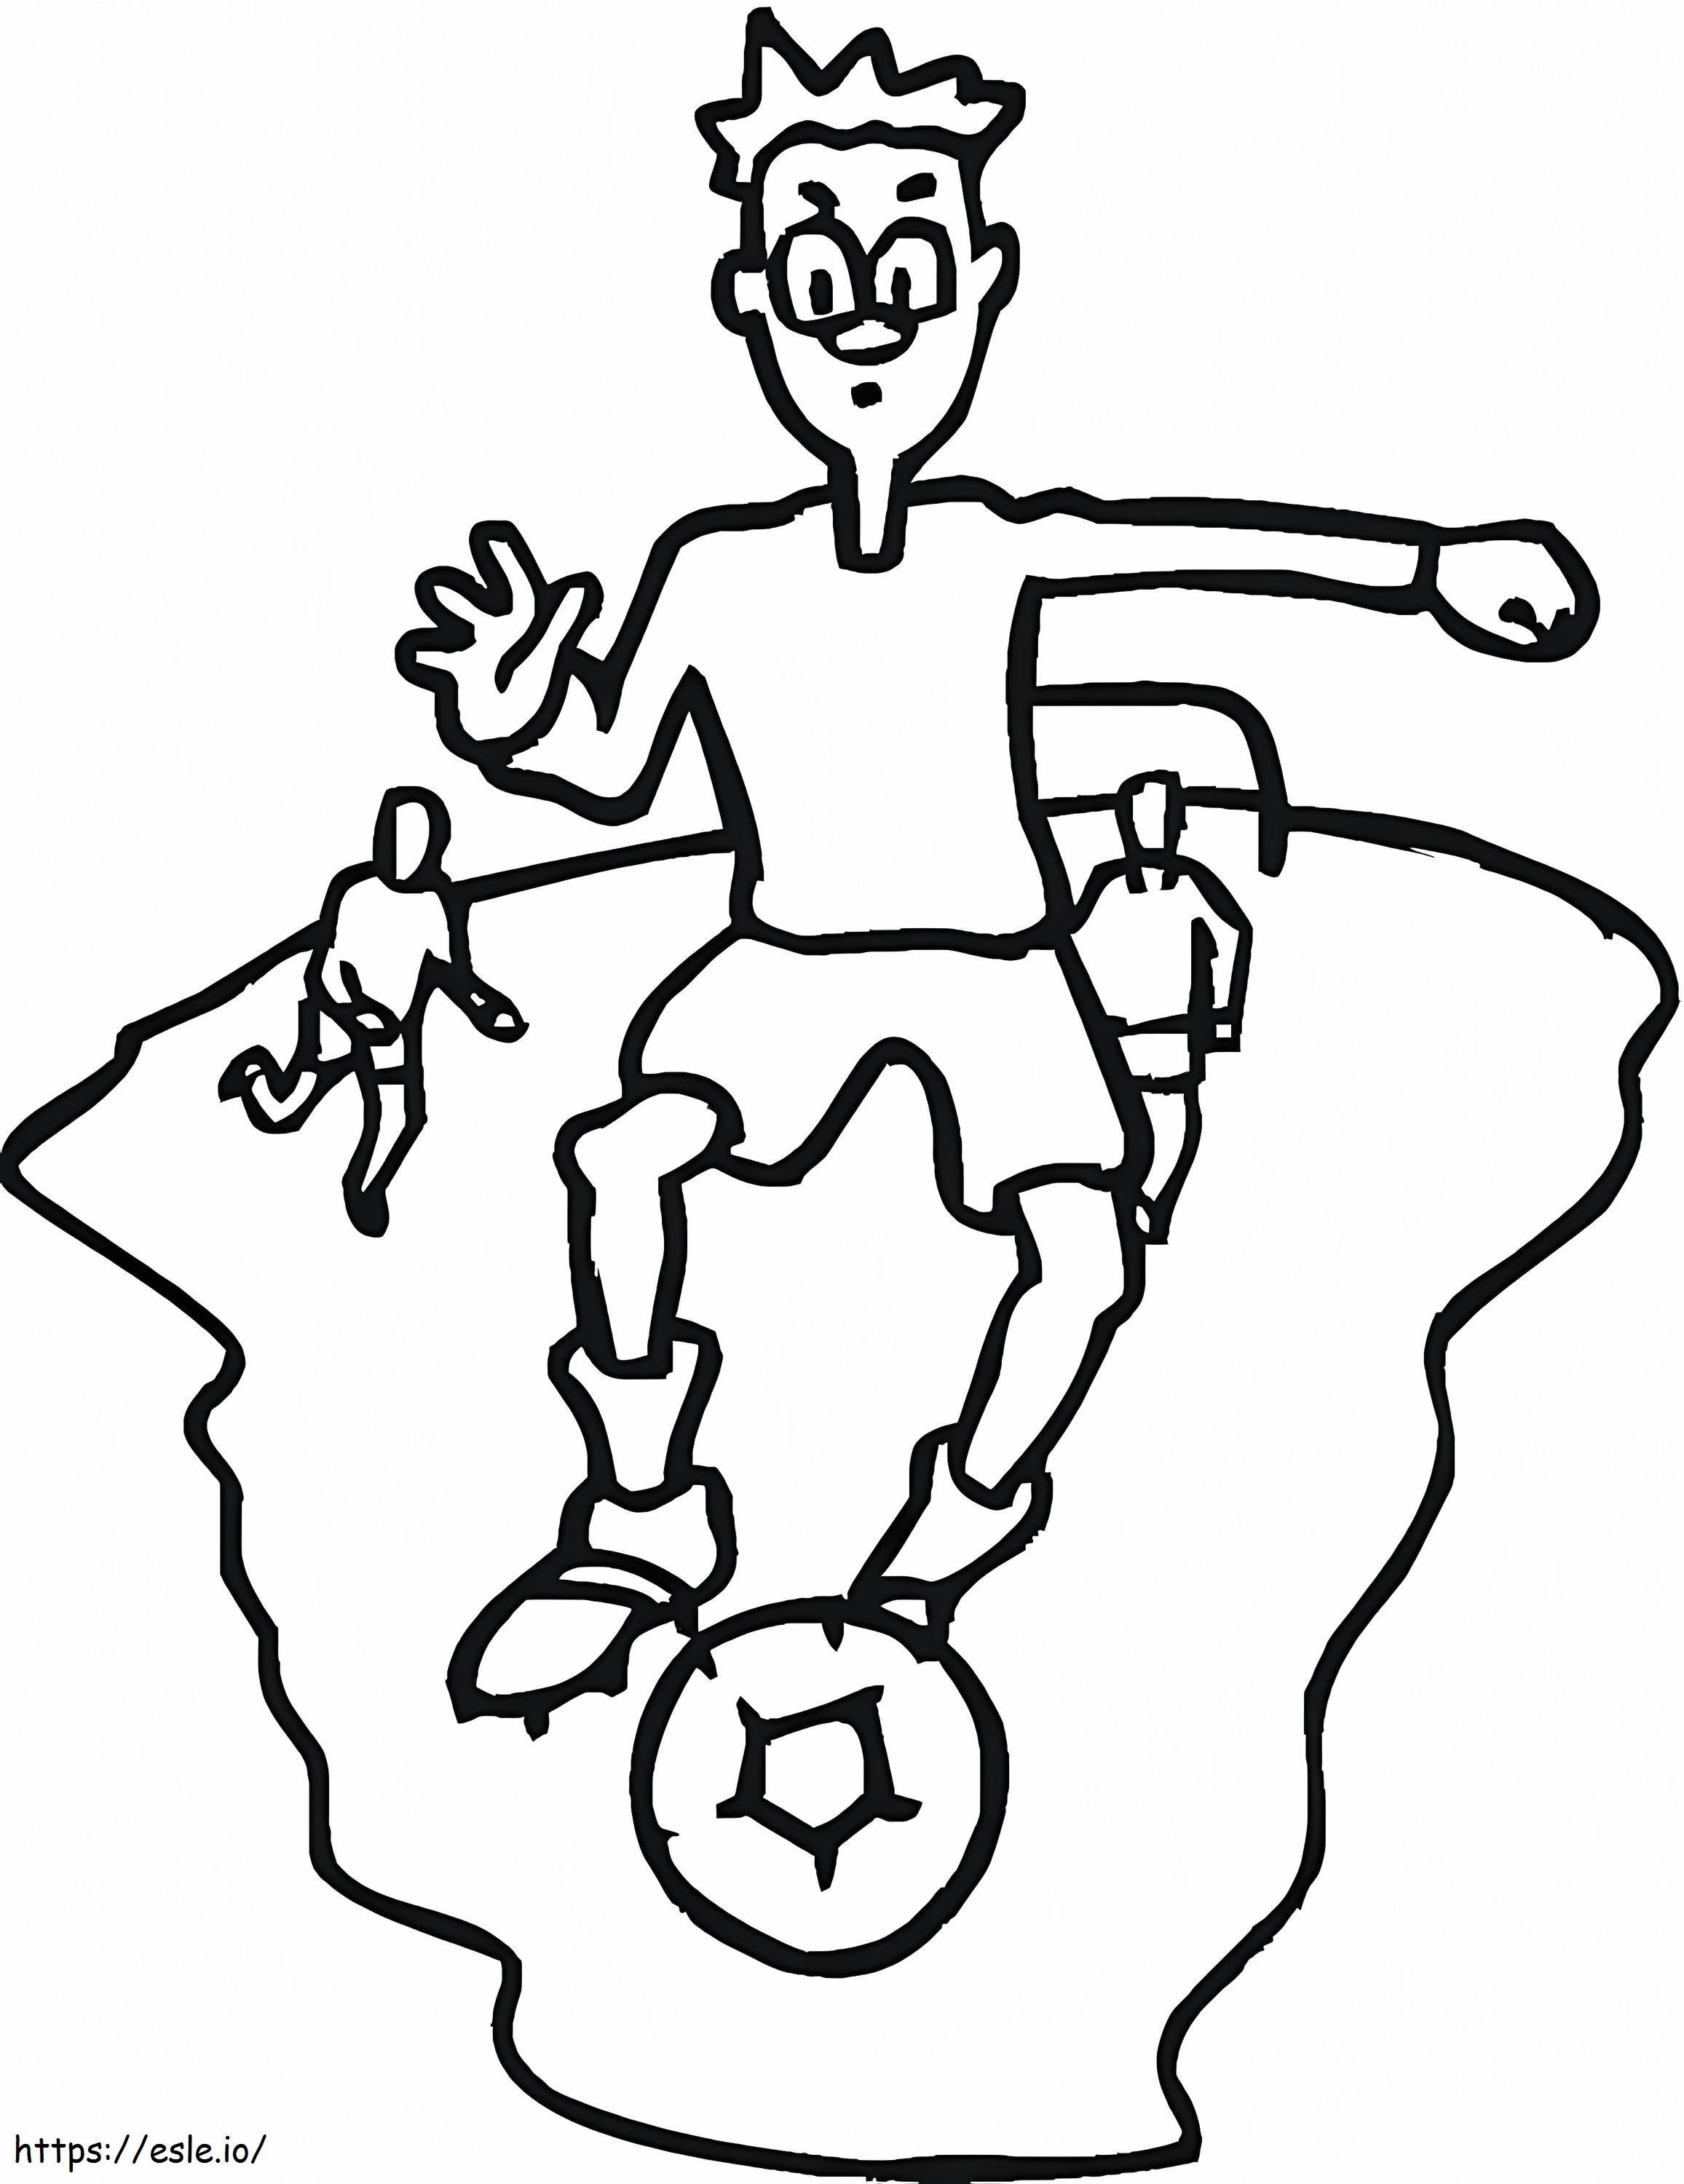 Menino jogando futebol para colorir